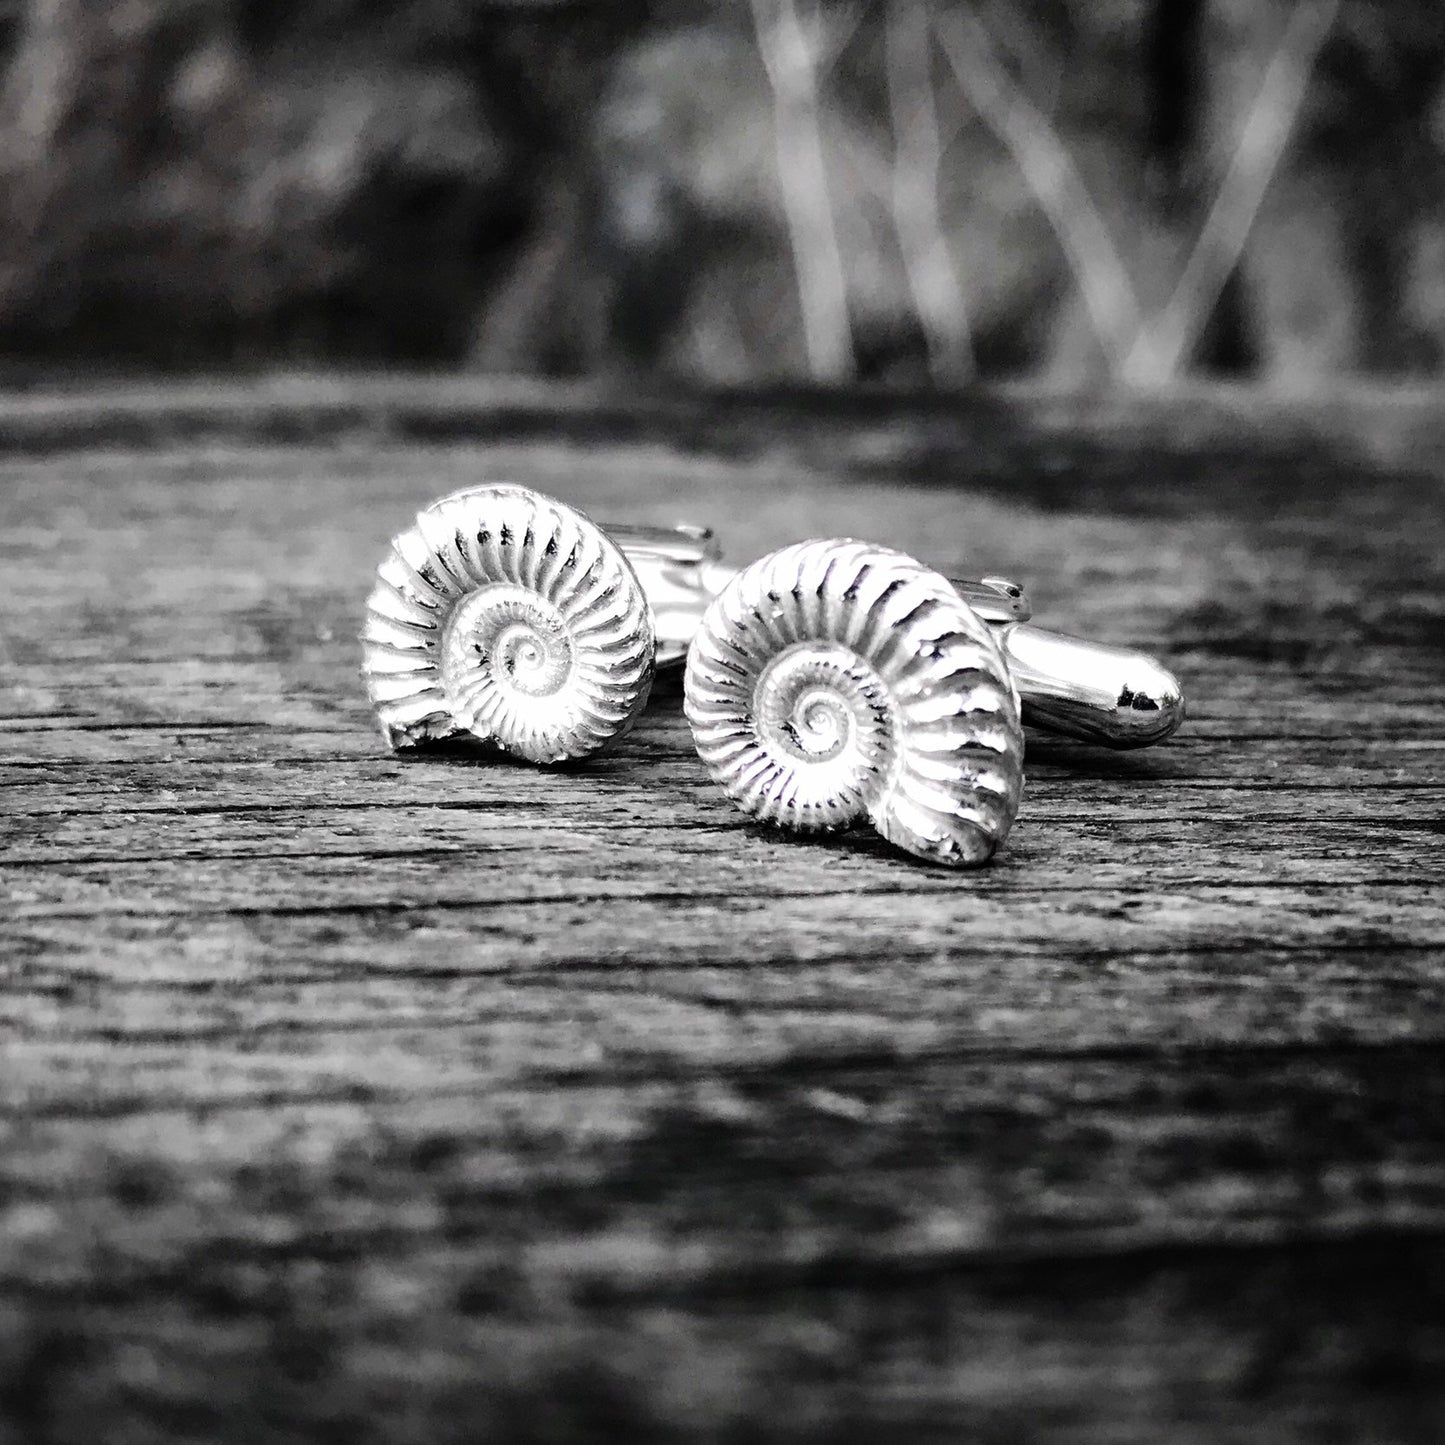 Ammonite Fossil Sterling Silver Cufflinks